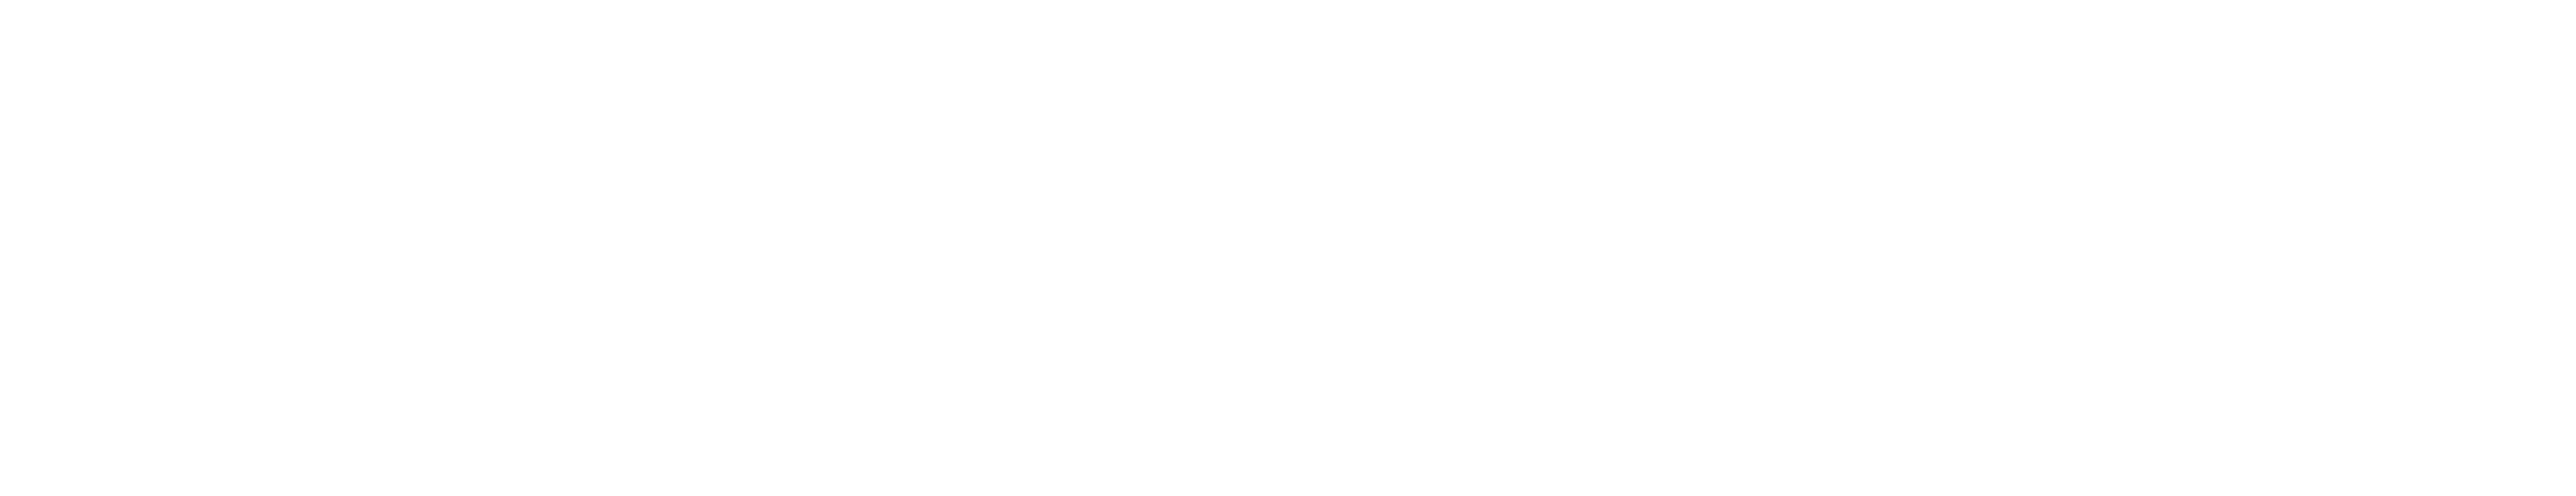 AngelFunder